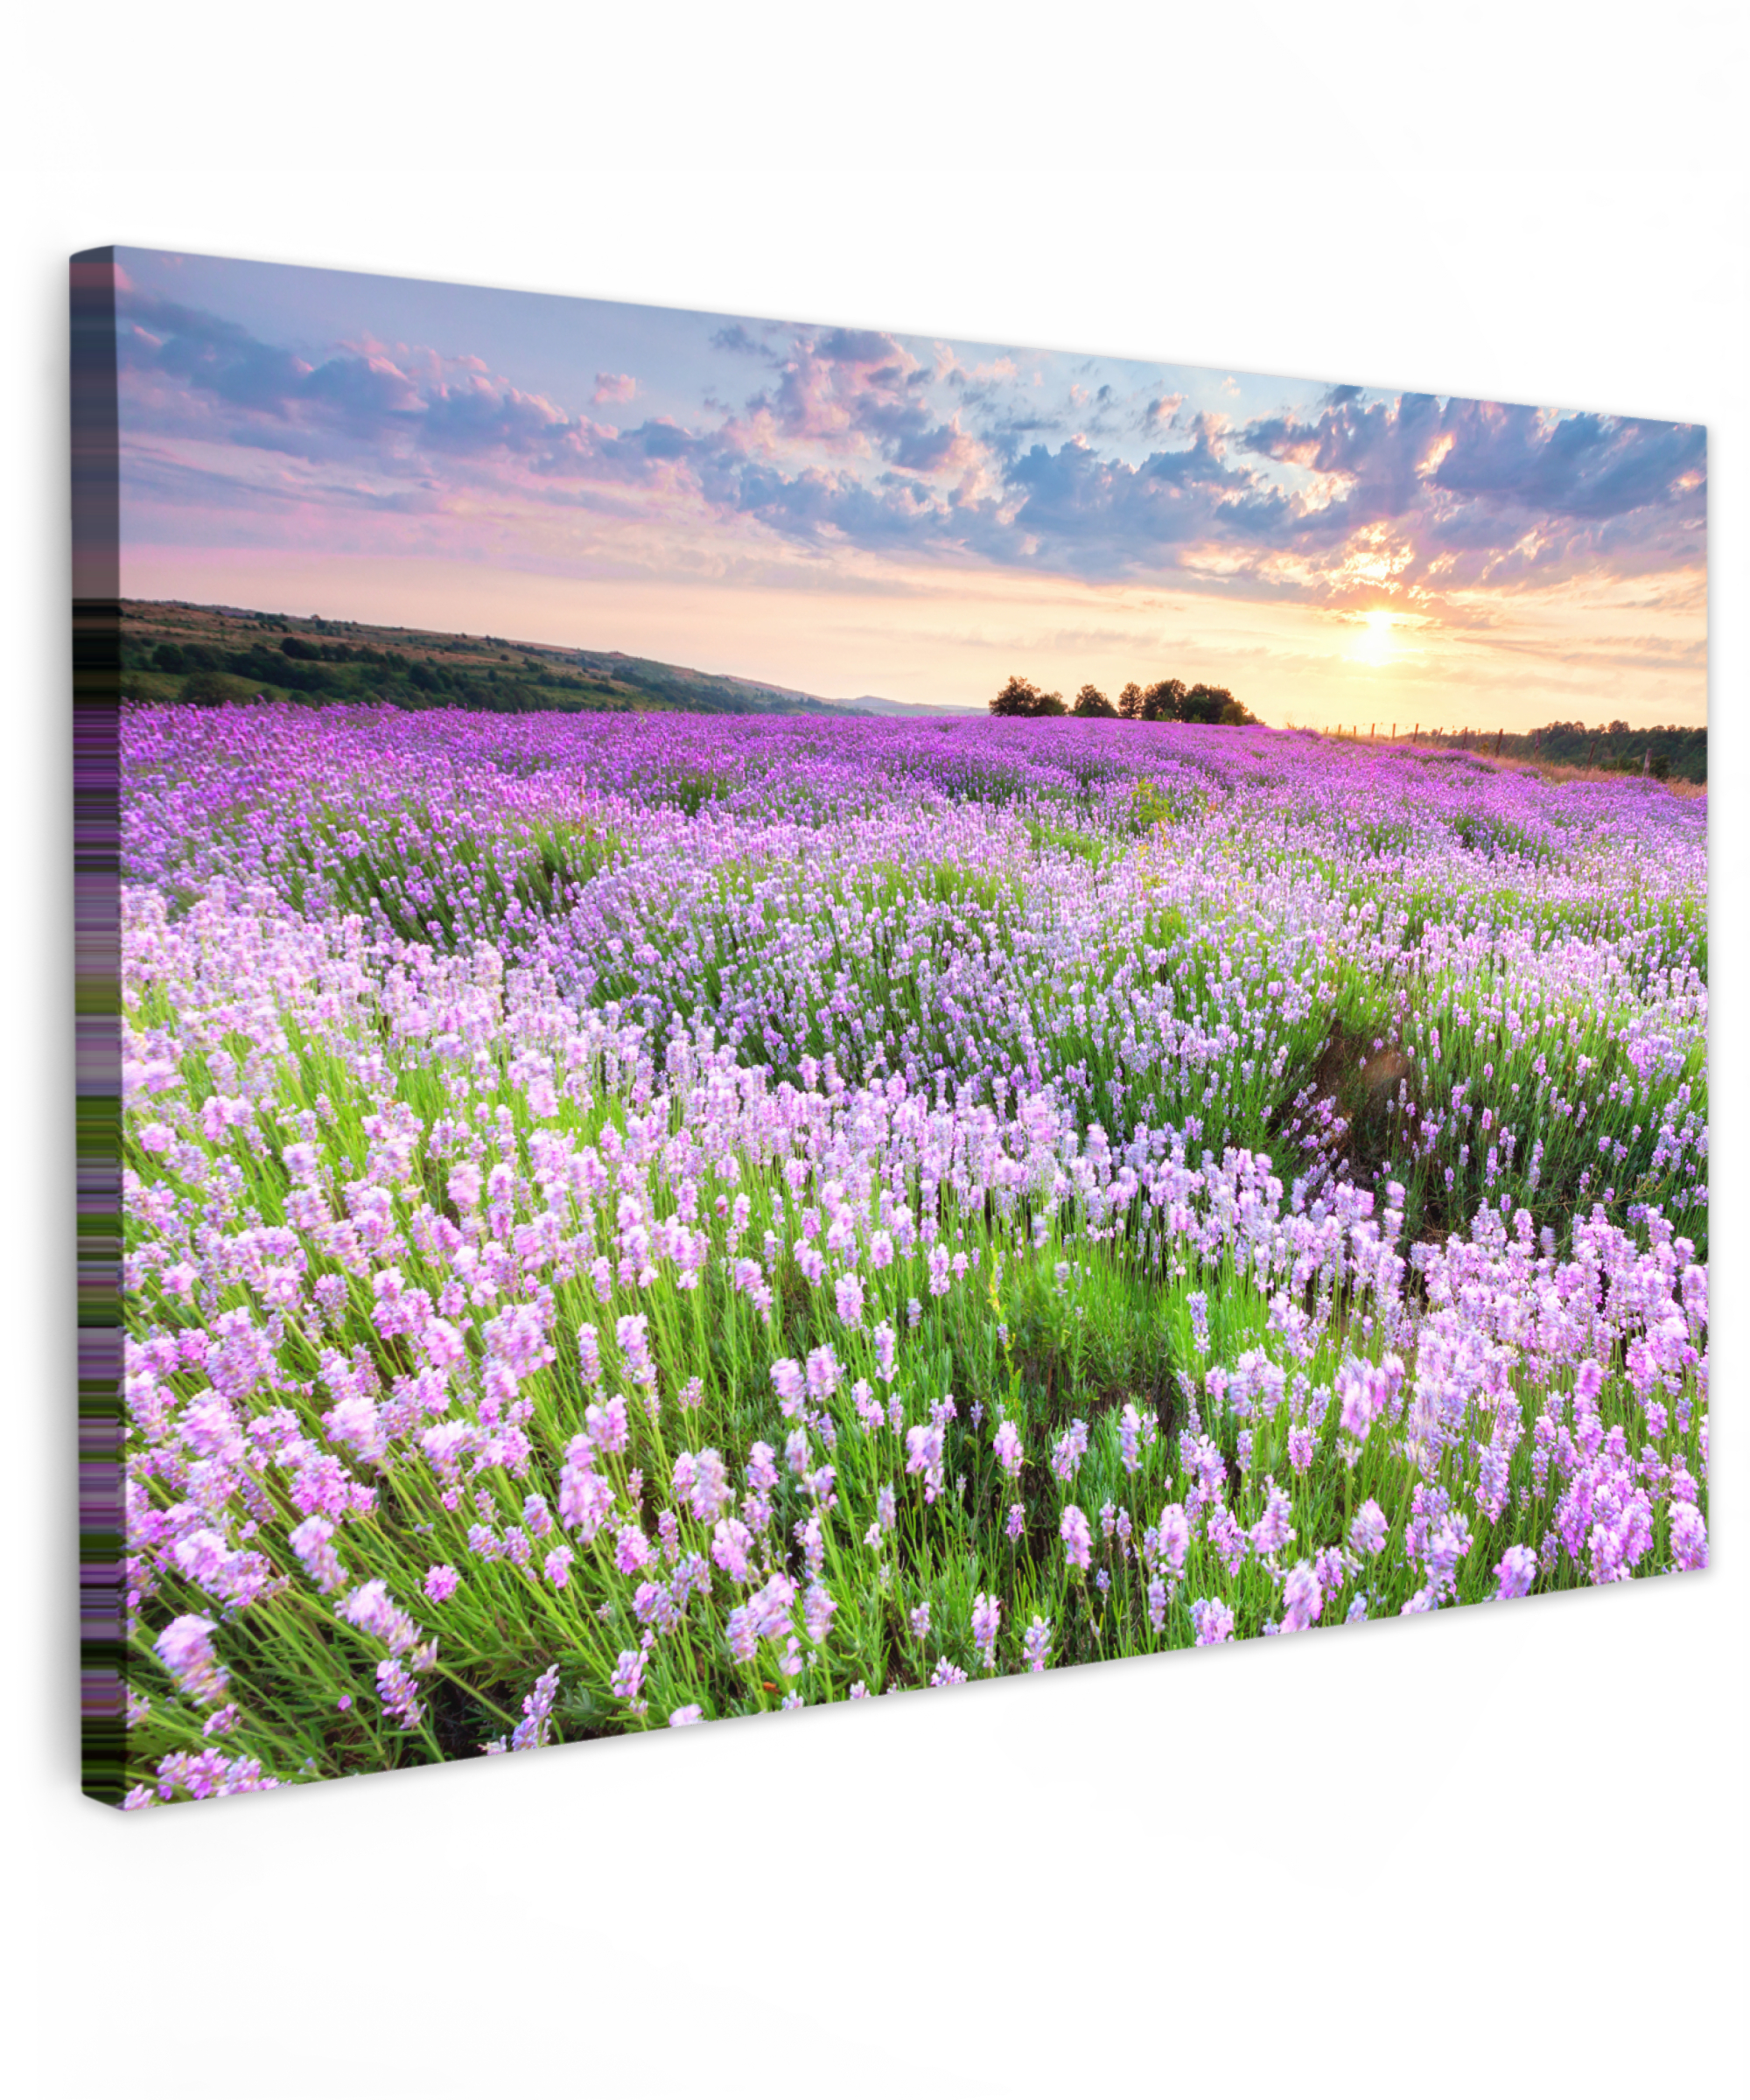 Leinwandbild - Blumen - Lavendel - Lila - Himmel - Sonnenuntergang - Weide - Natur